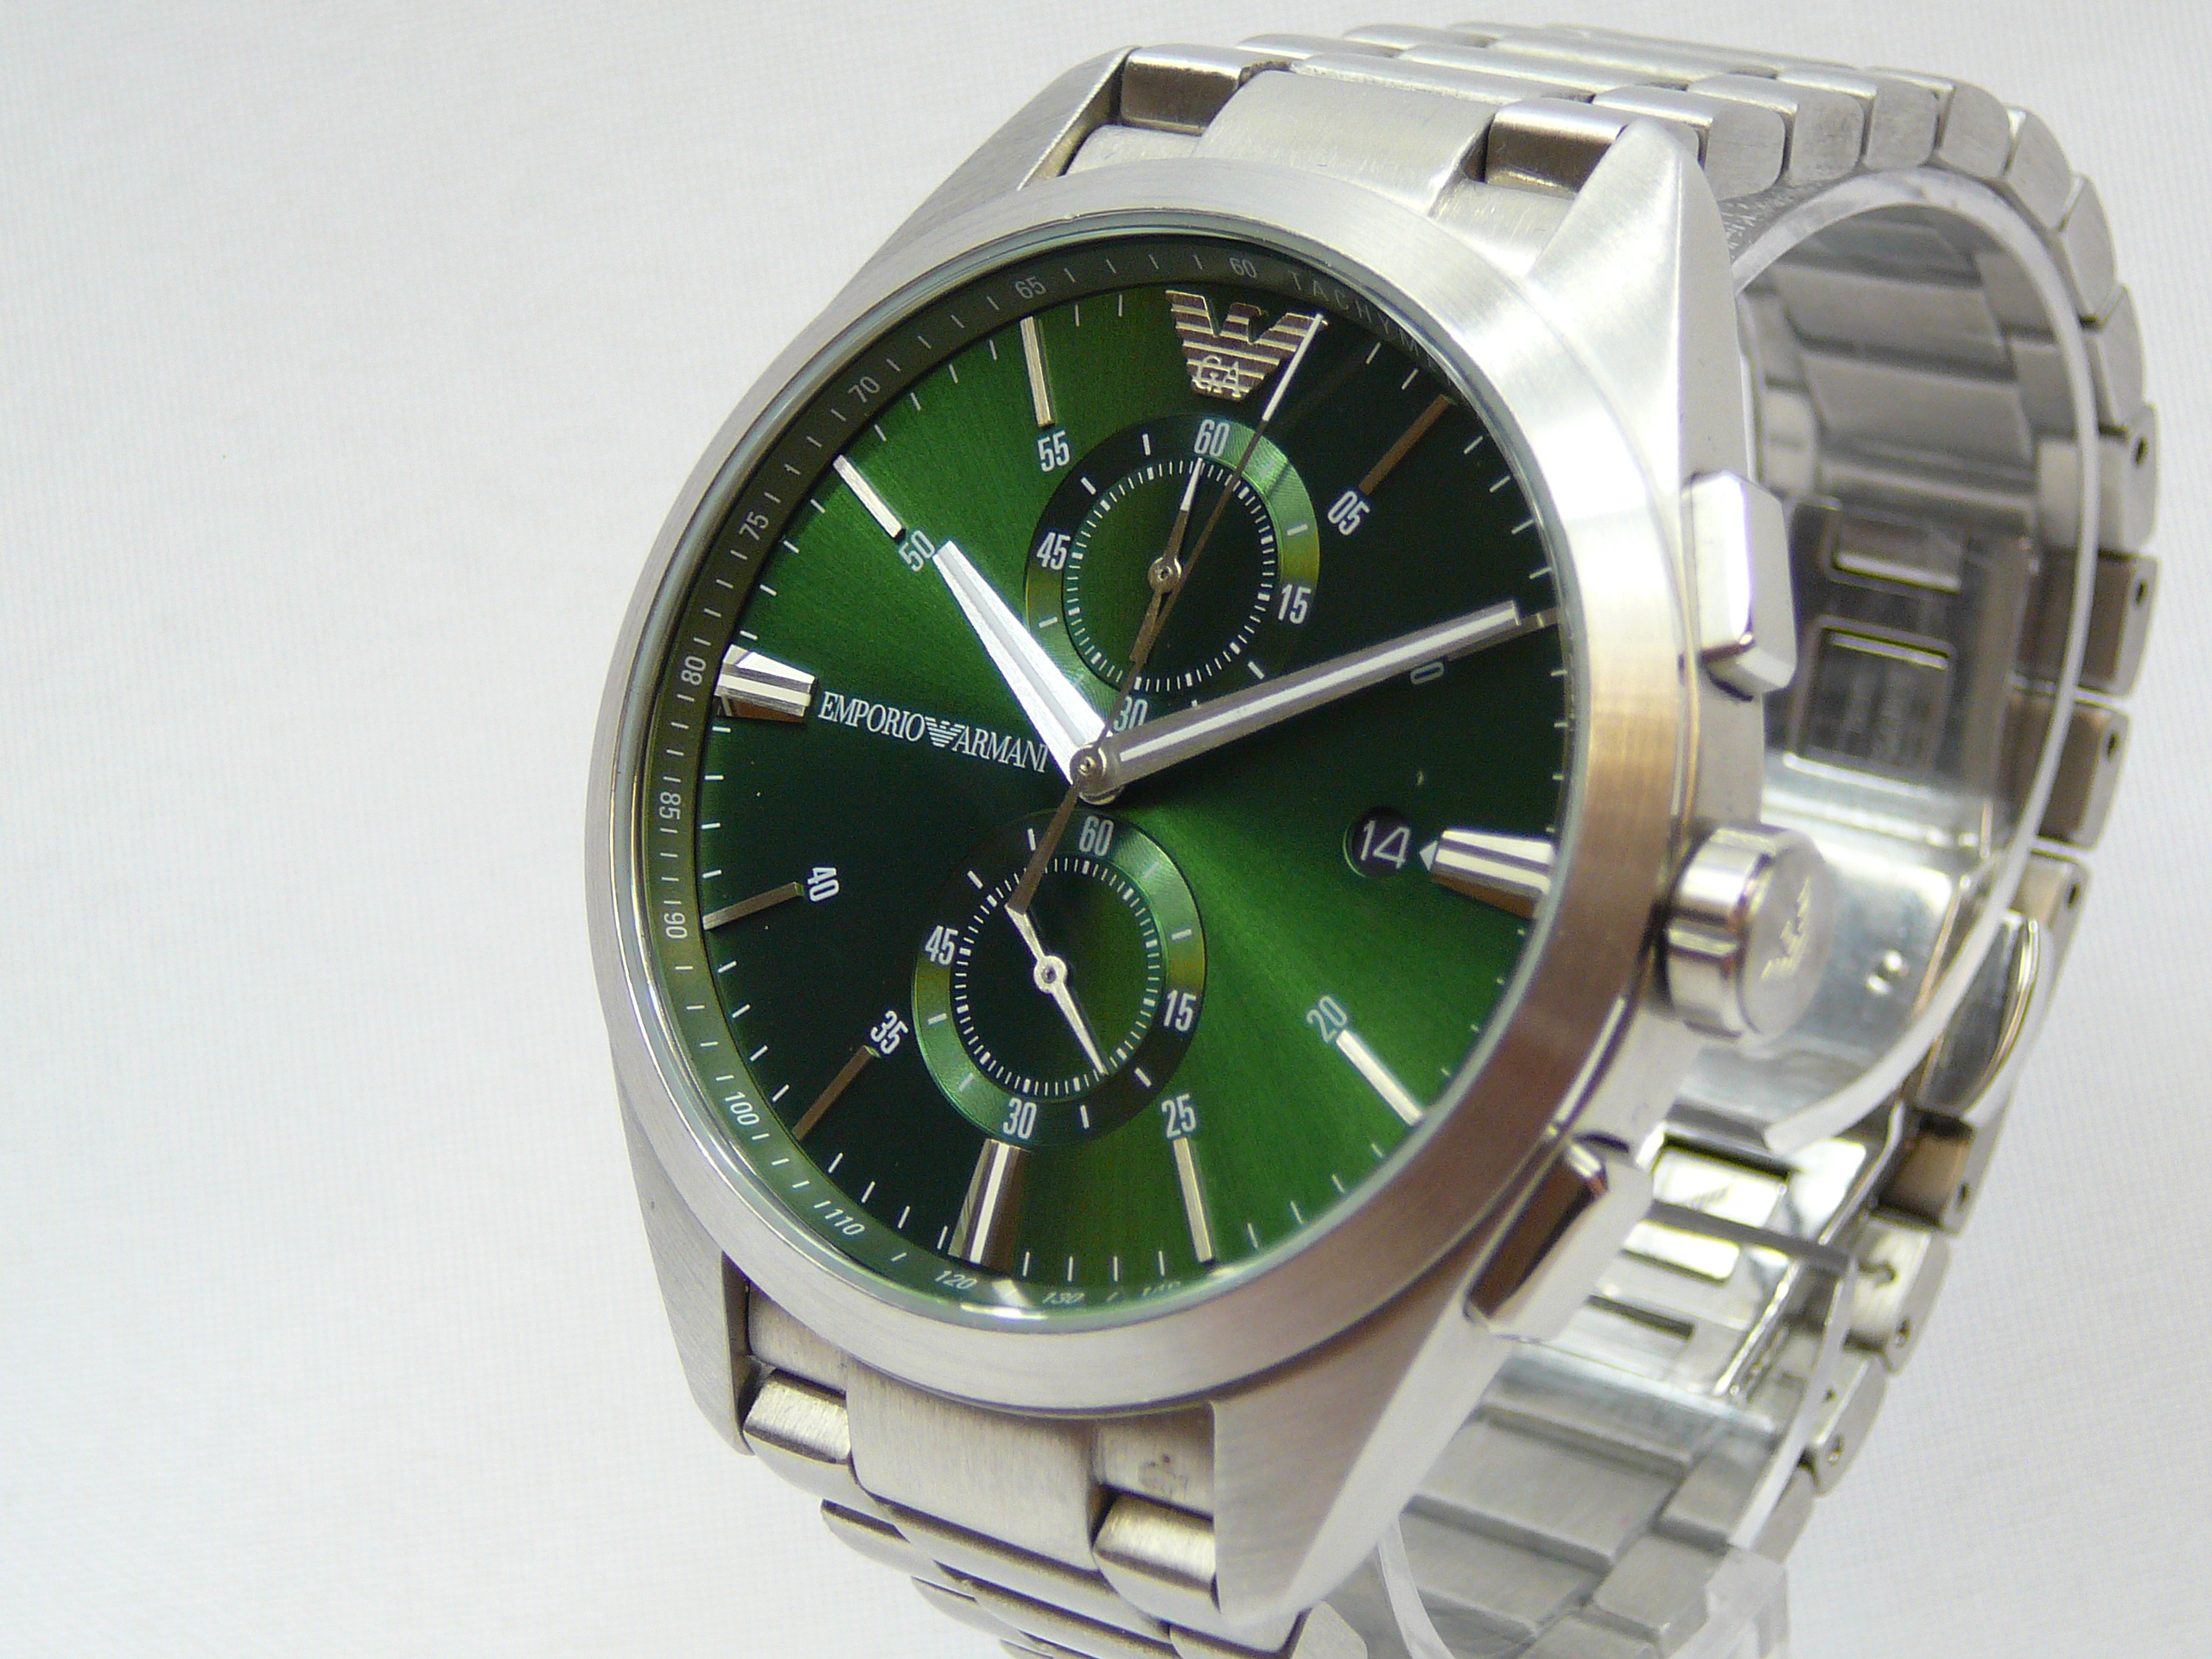 Gents Emporio Armani Wrist Watch - Image 2 of 3